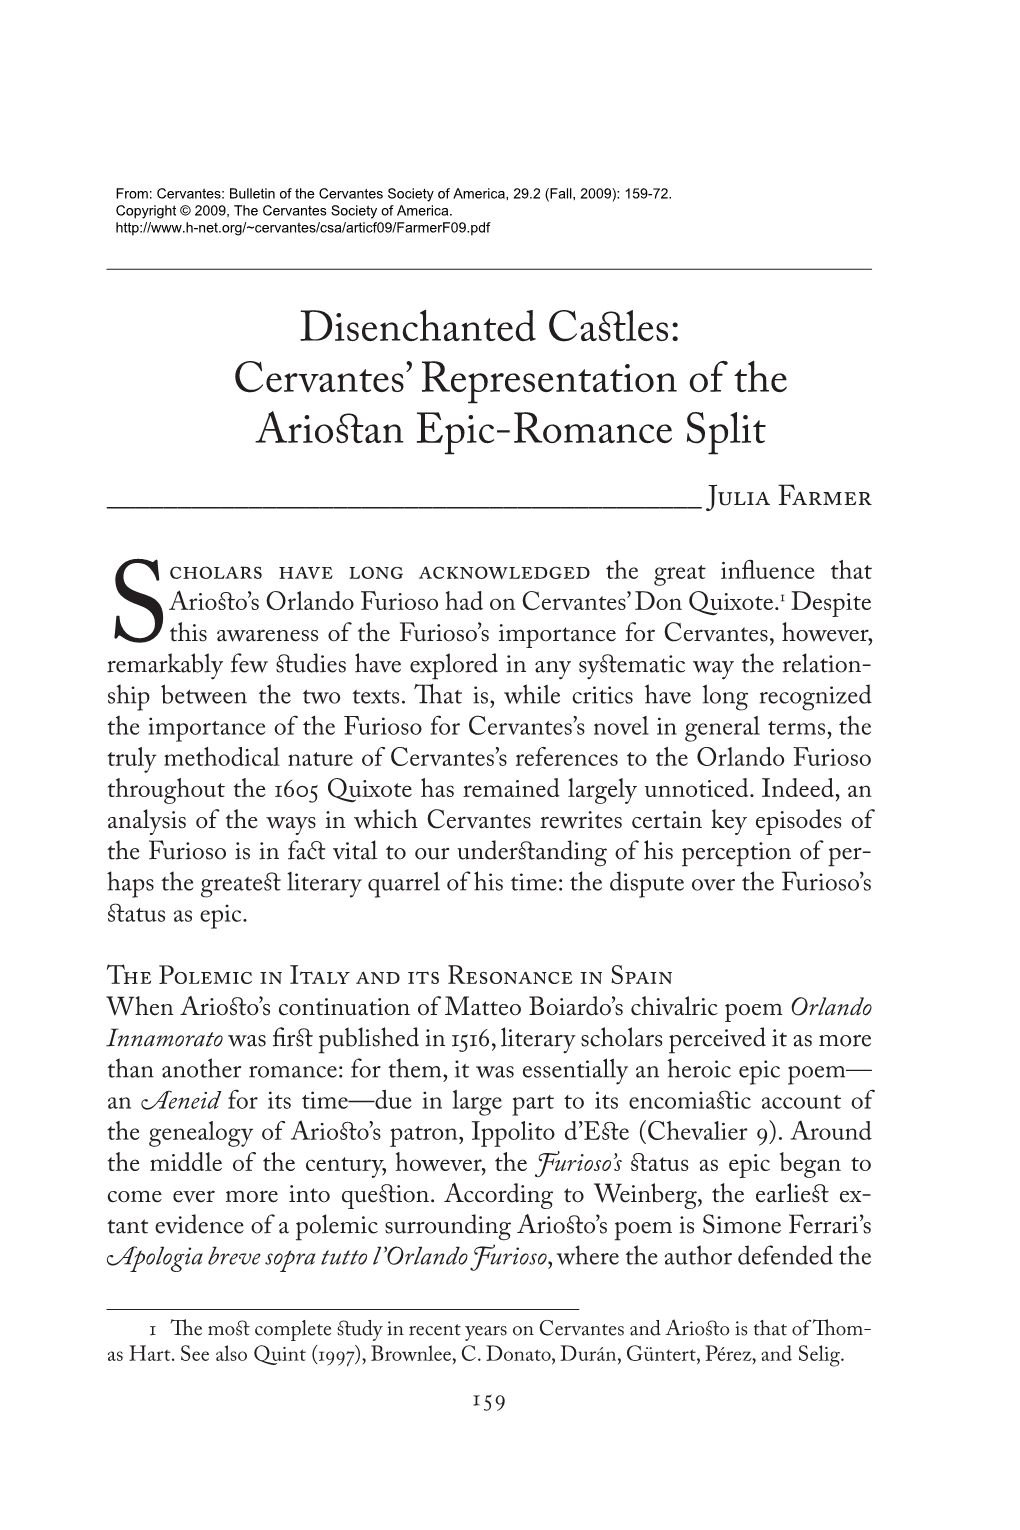 Cervantes' Representation of the Ariostan Epic-Romance Split